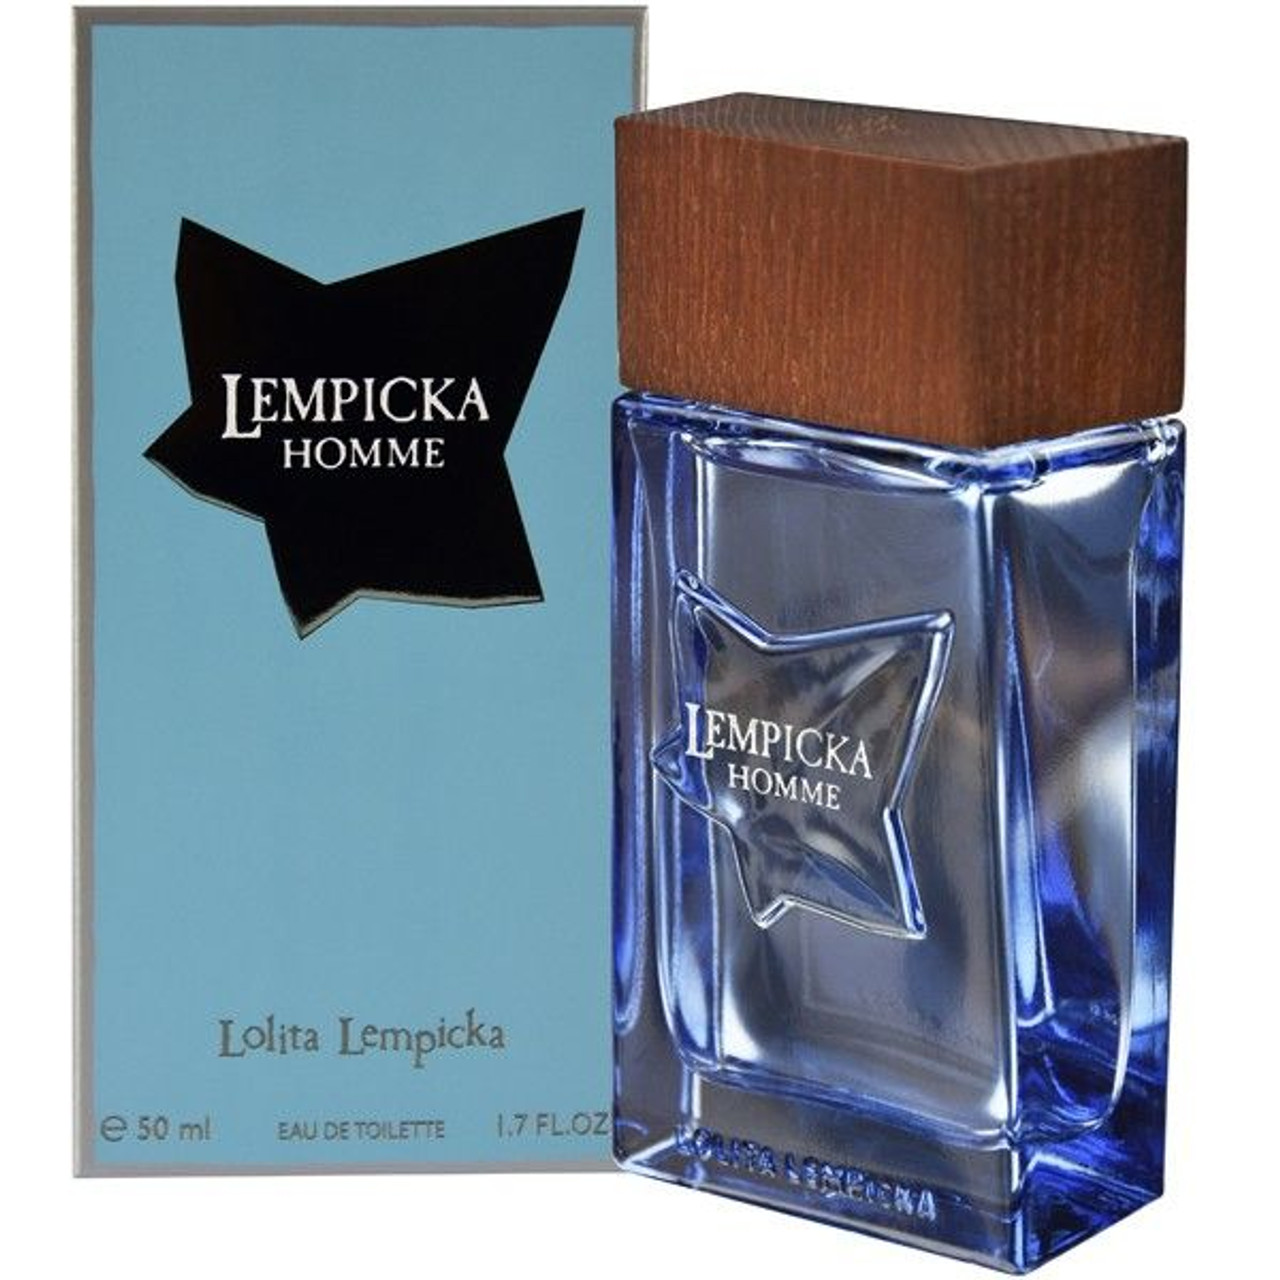 Lolita Lempicka Eau de Parfum Spray, 3.4 fl. oz.